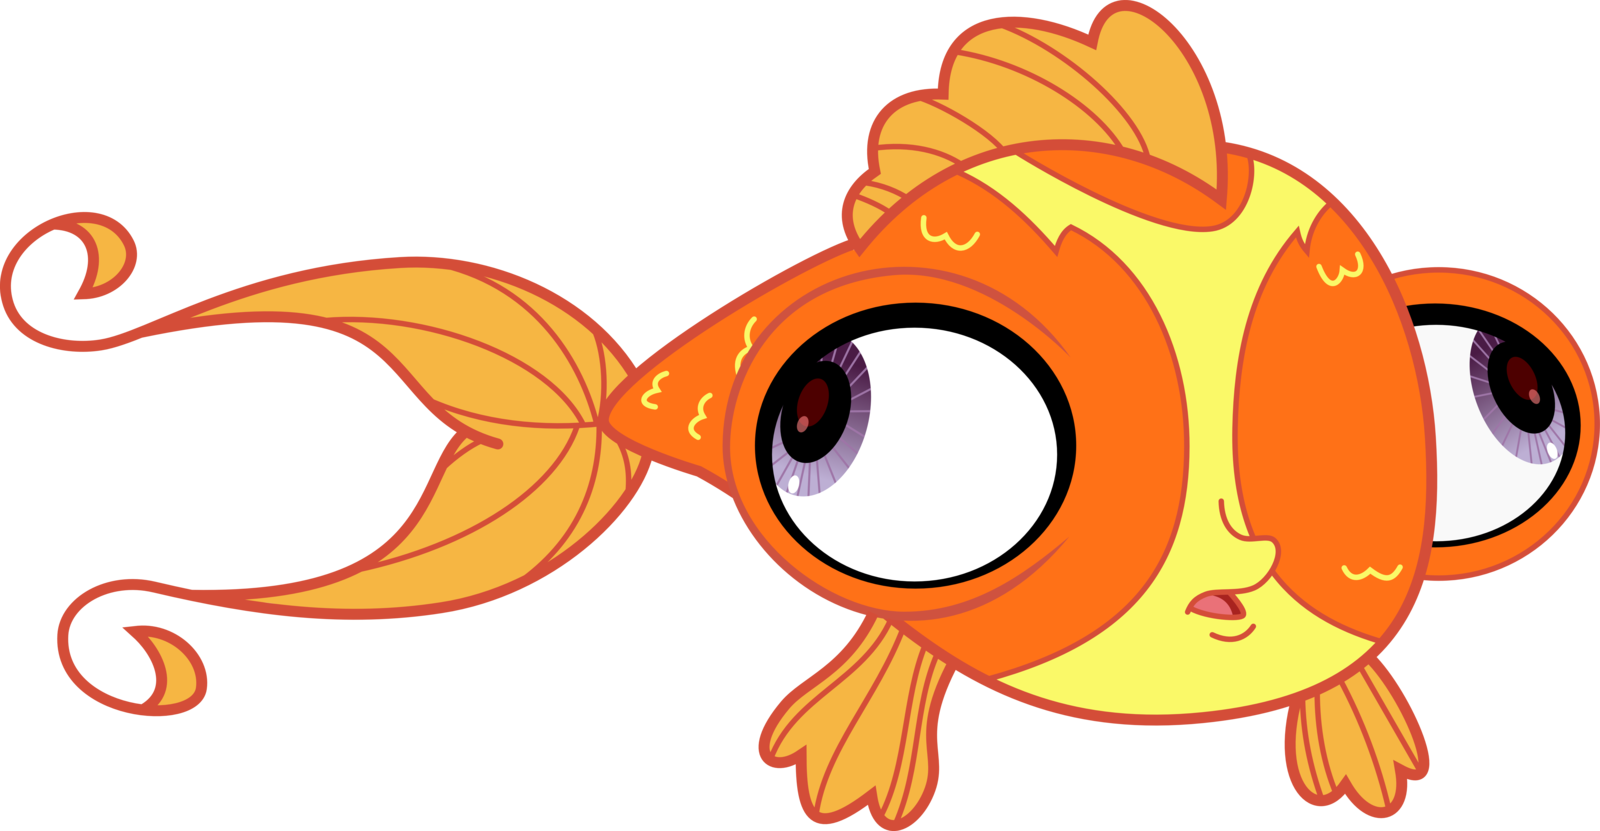 More Images Of Fish Cartoons Images - Crazy Fish Cartoon (1600x831)